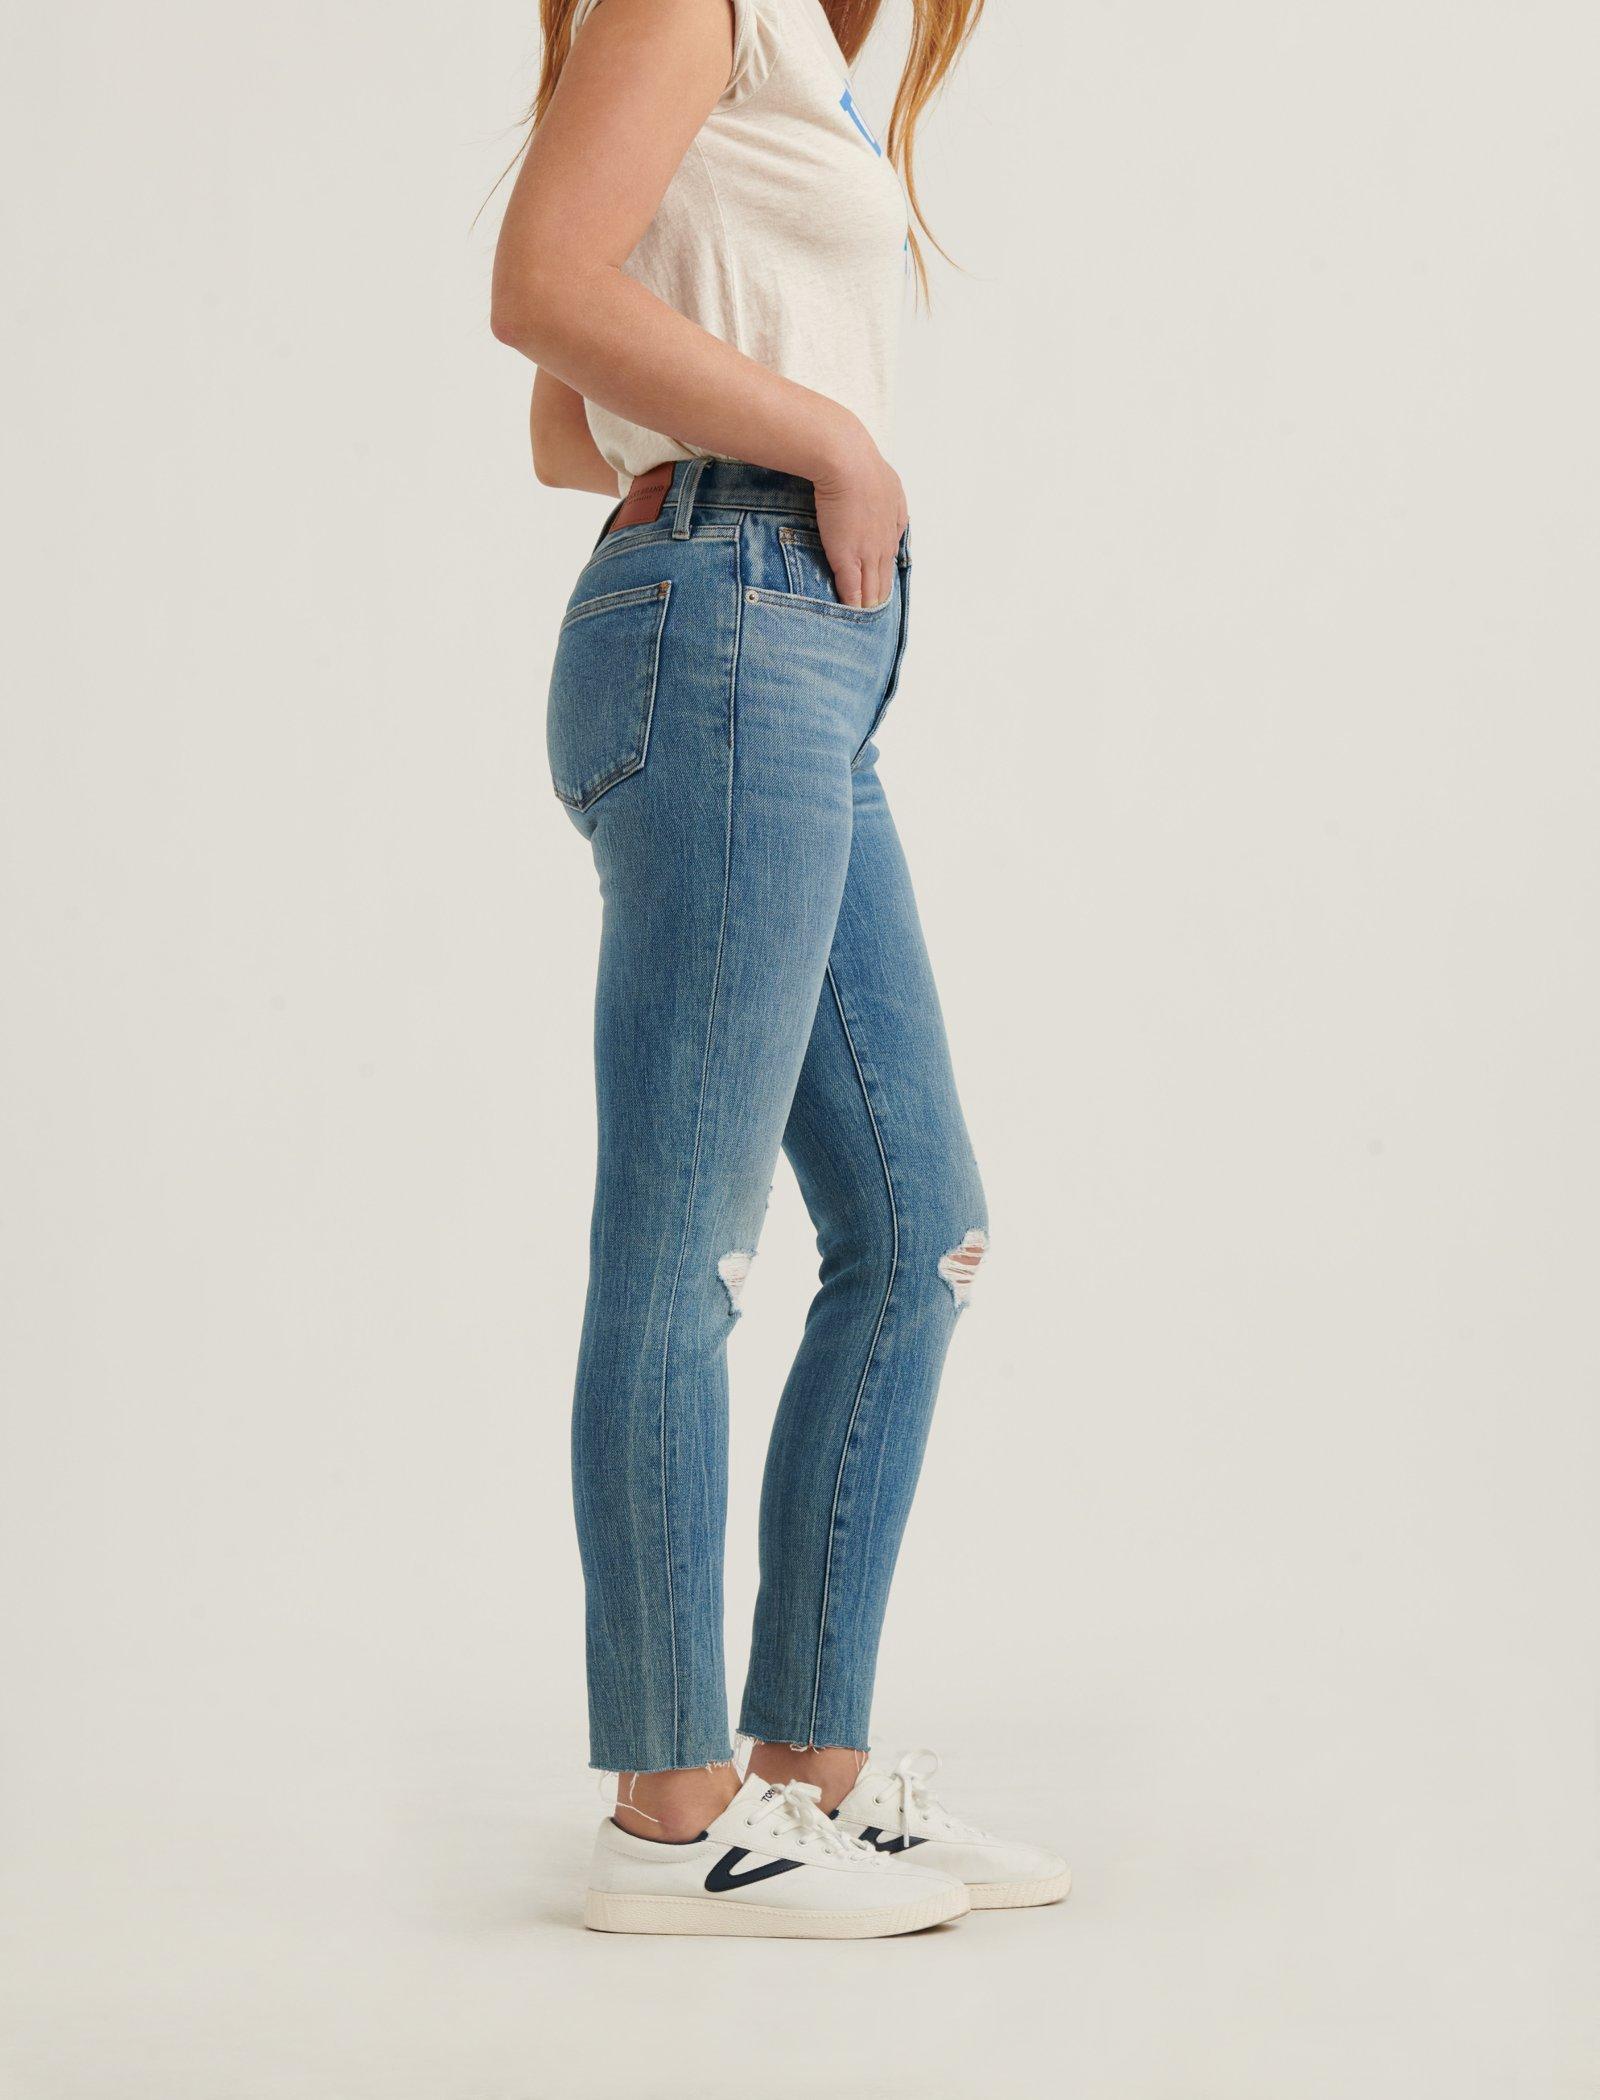 lucky brand women's jeans